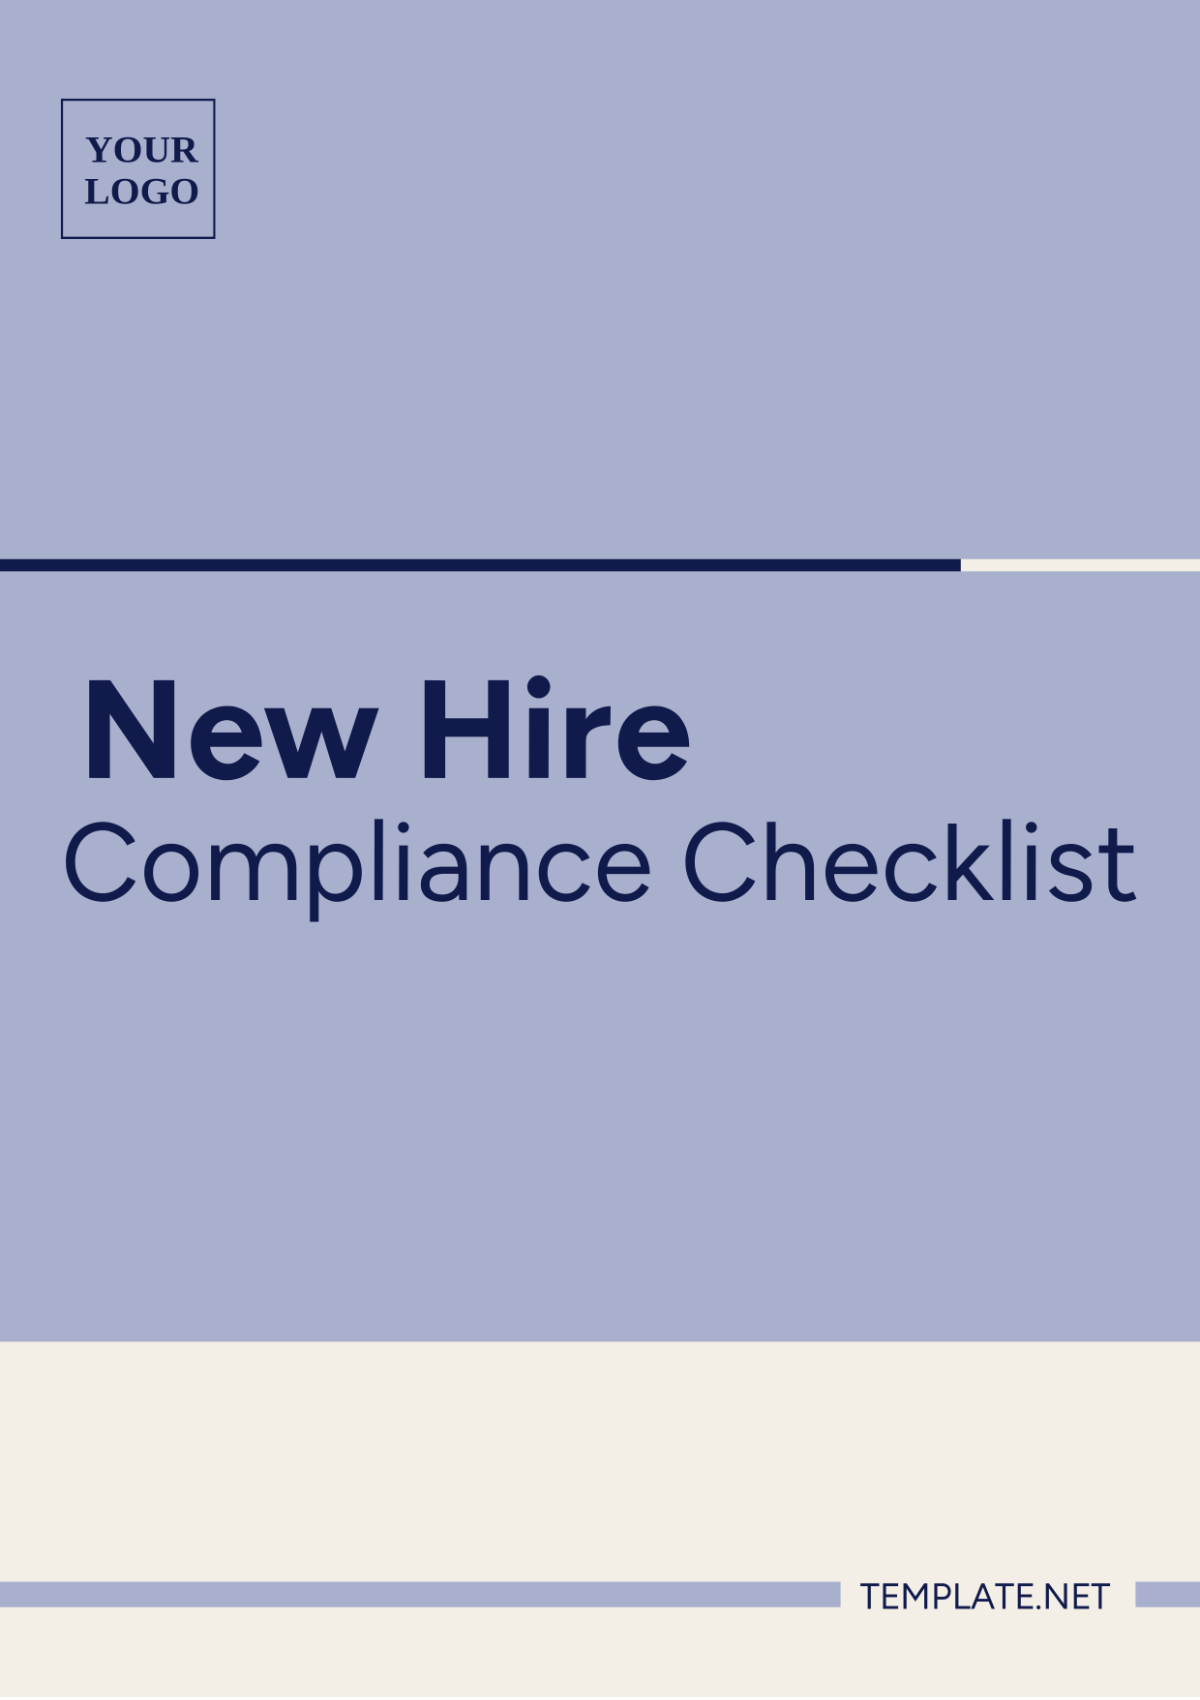 New Hire Compliance Checklist Template